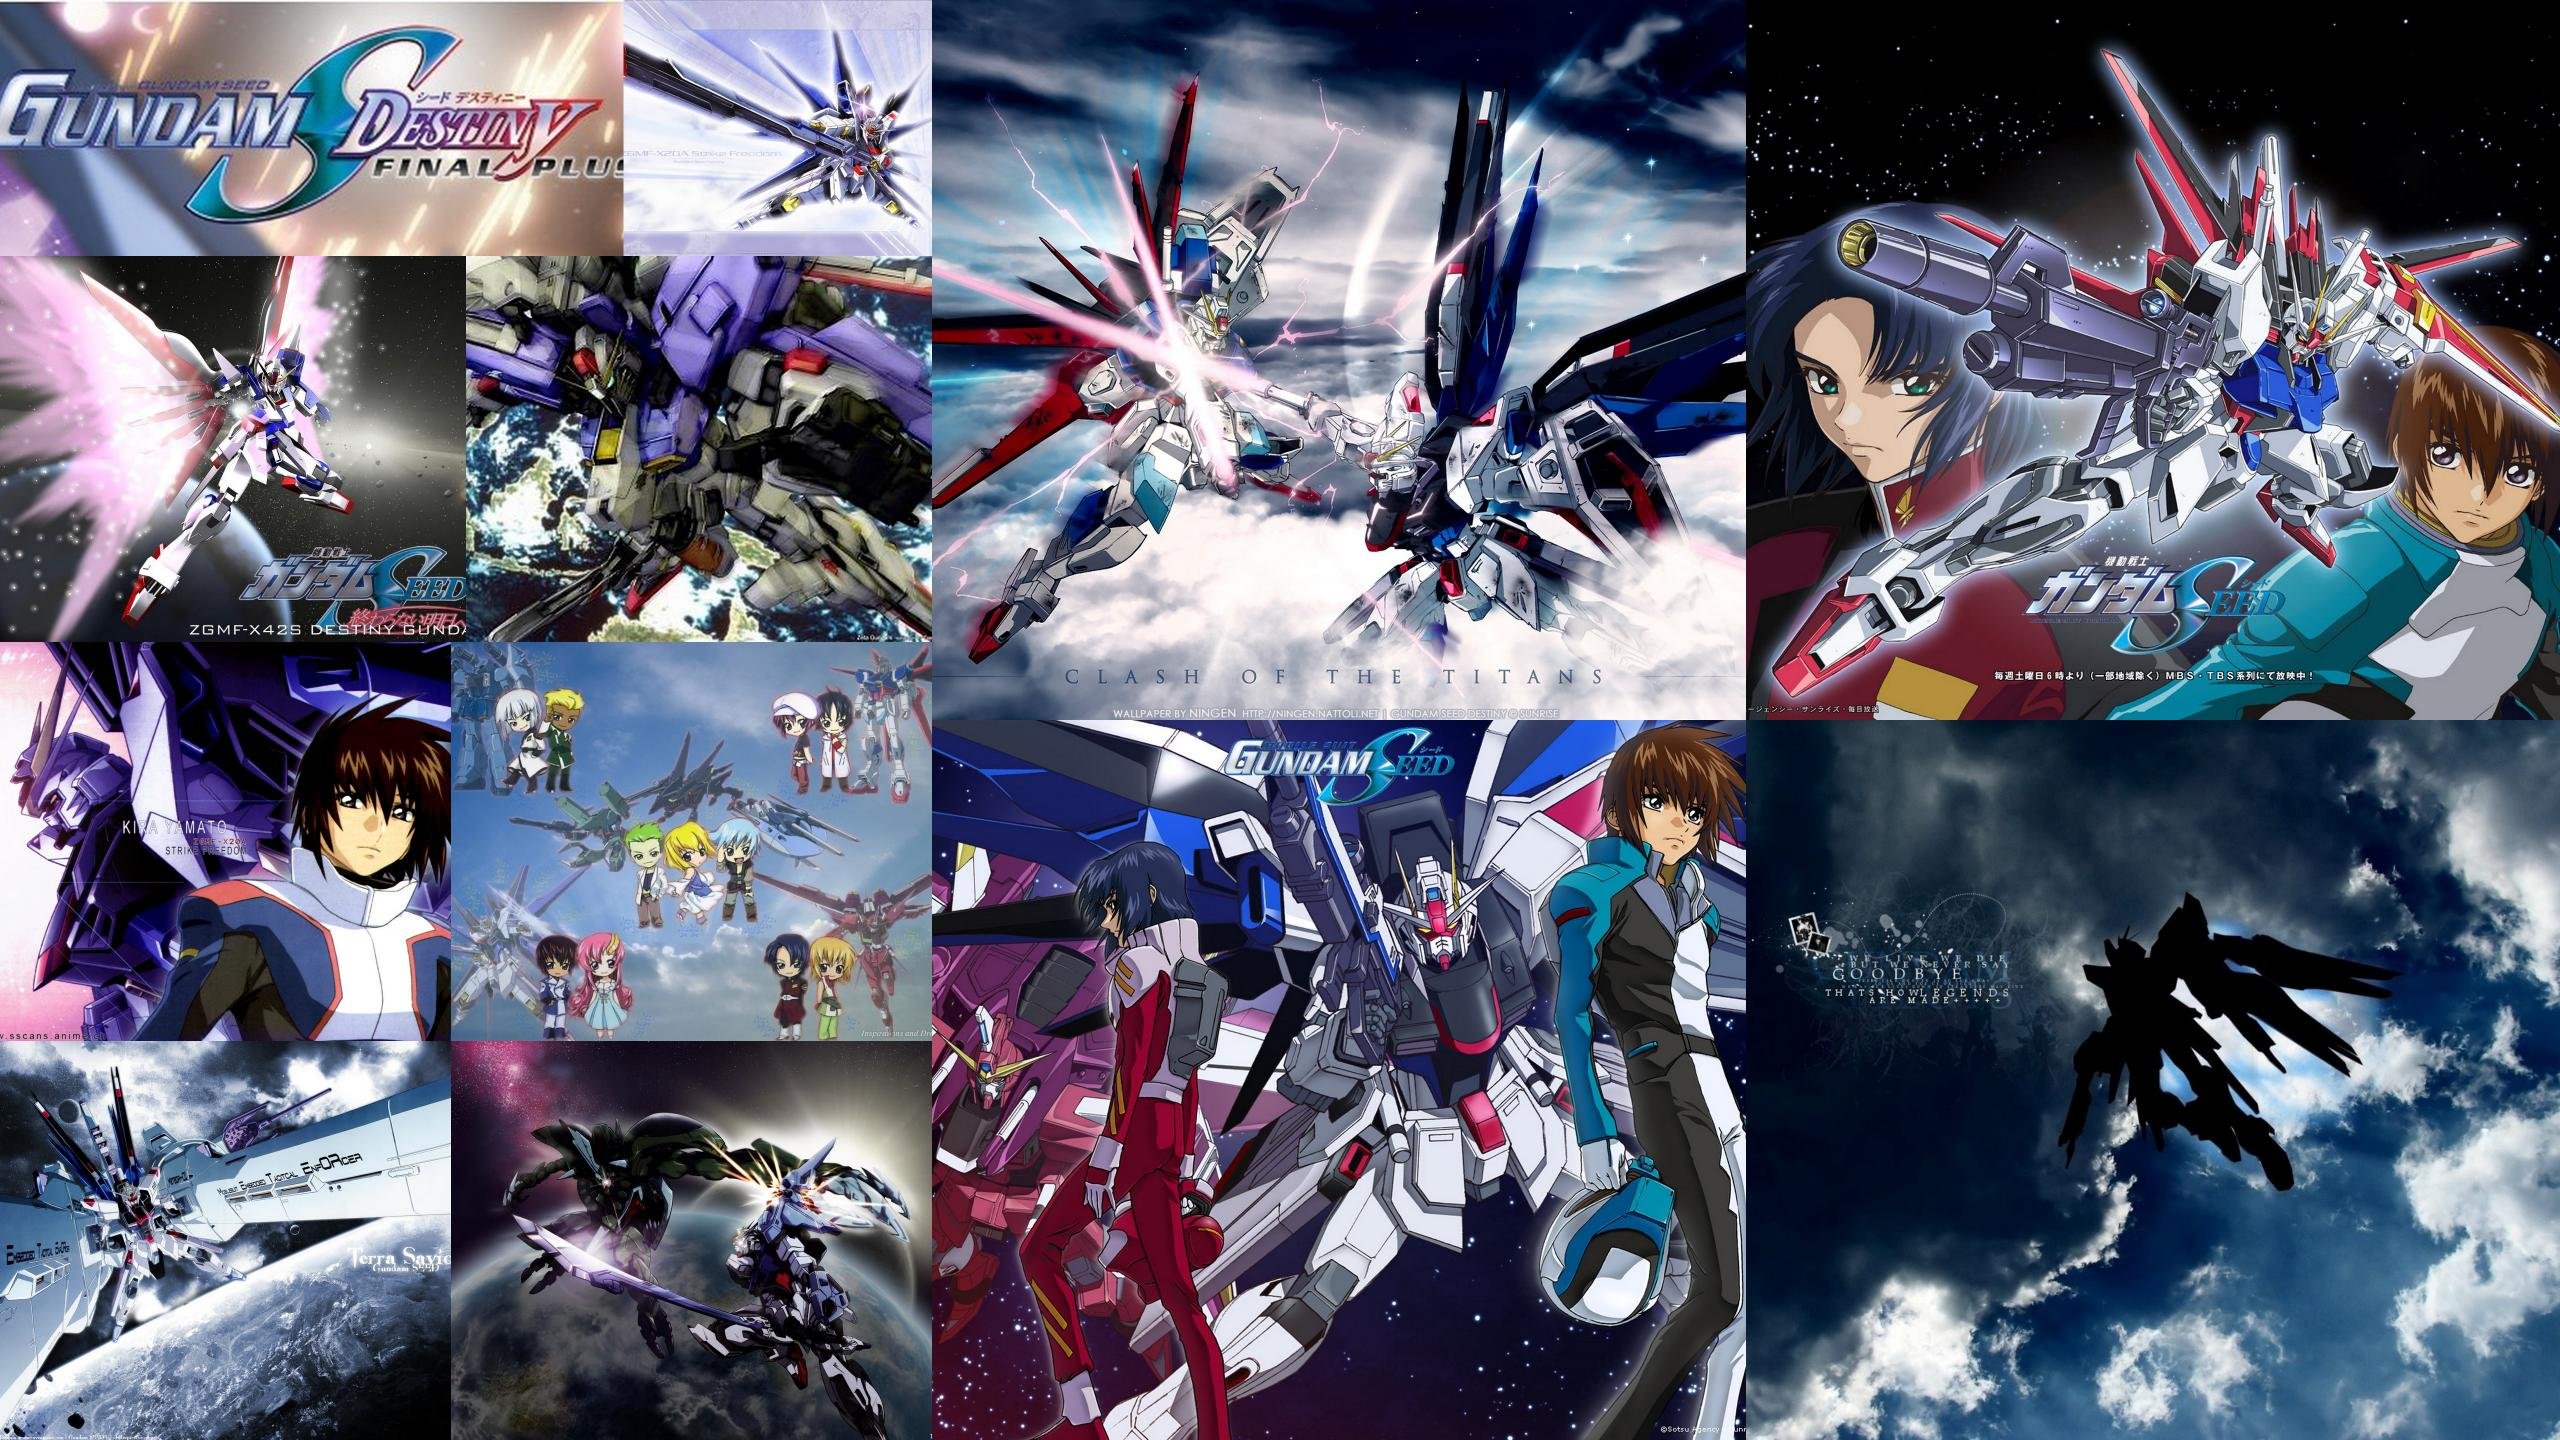 Download hd 2560x1440 Gundam computer wallpaper ID:115108 for free